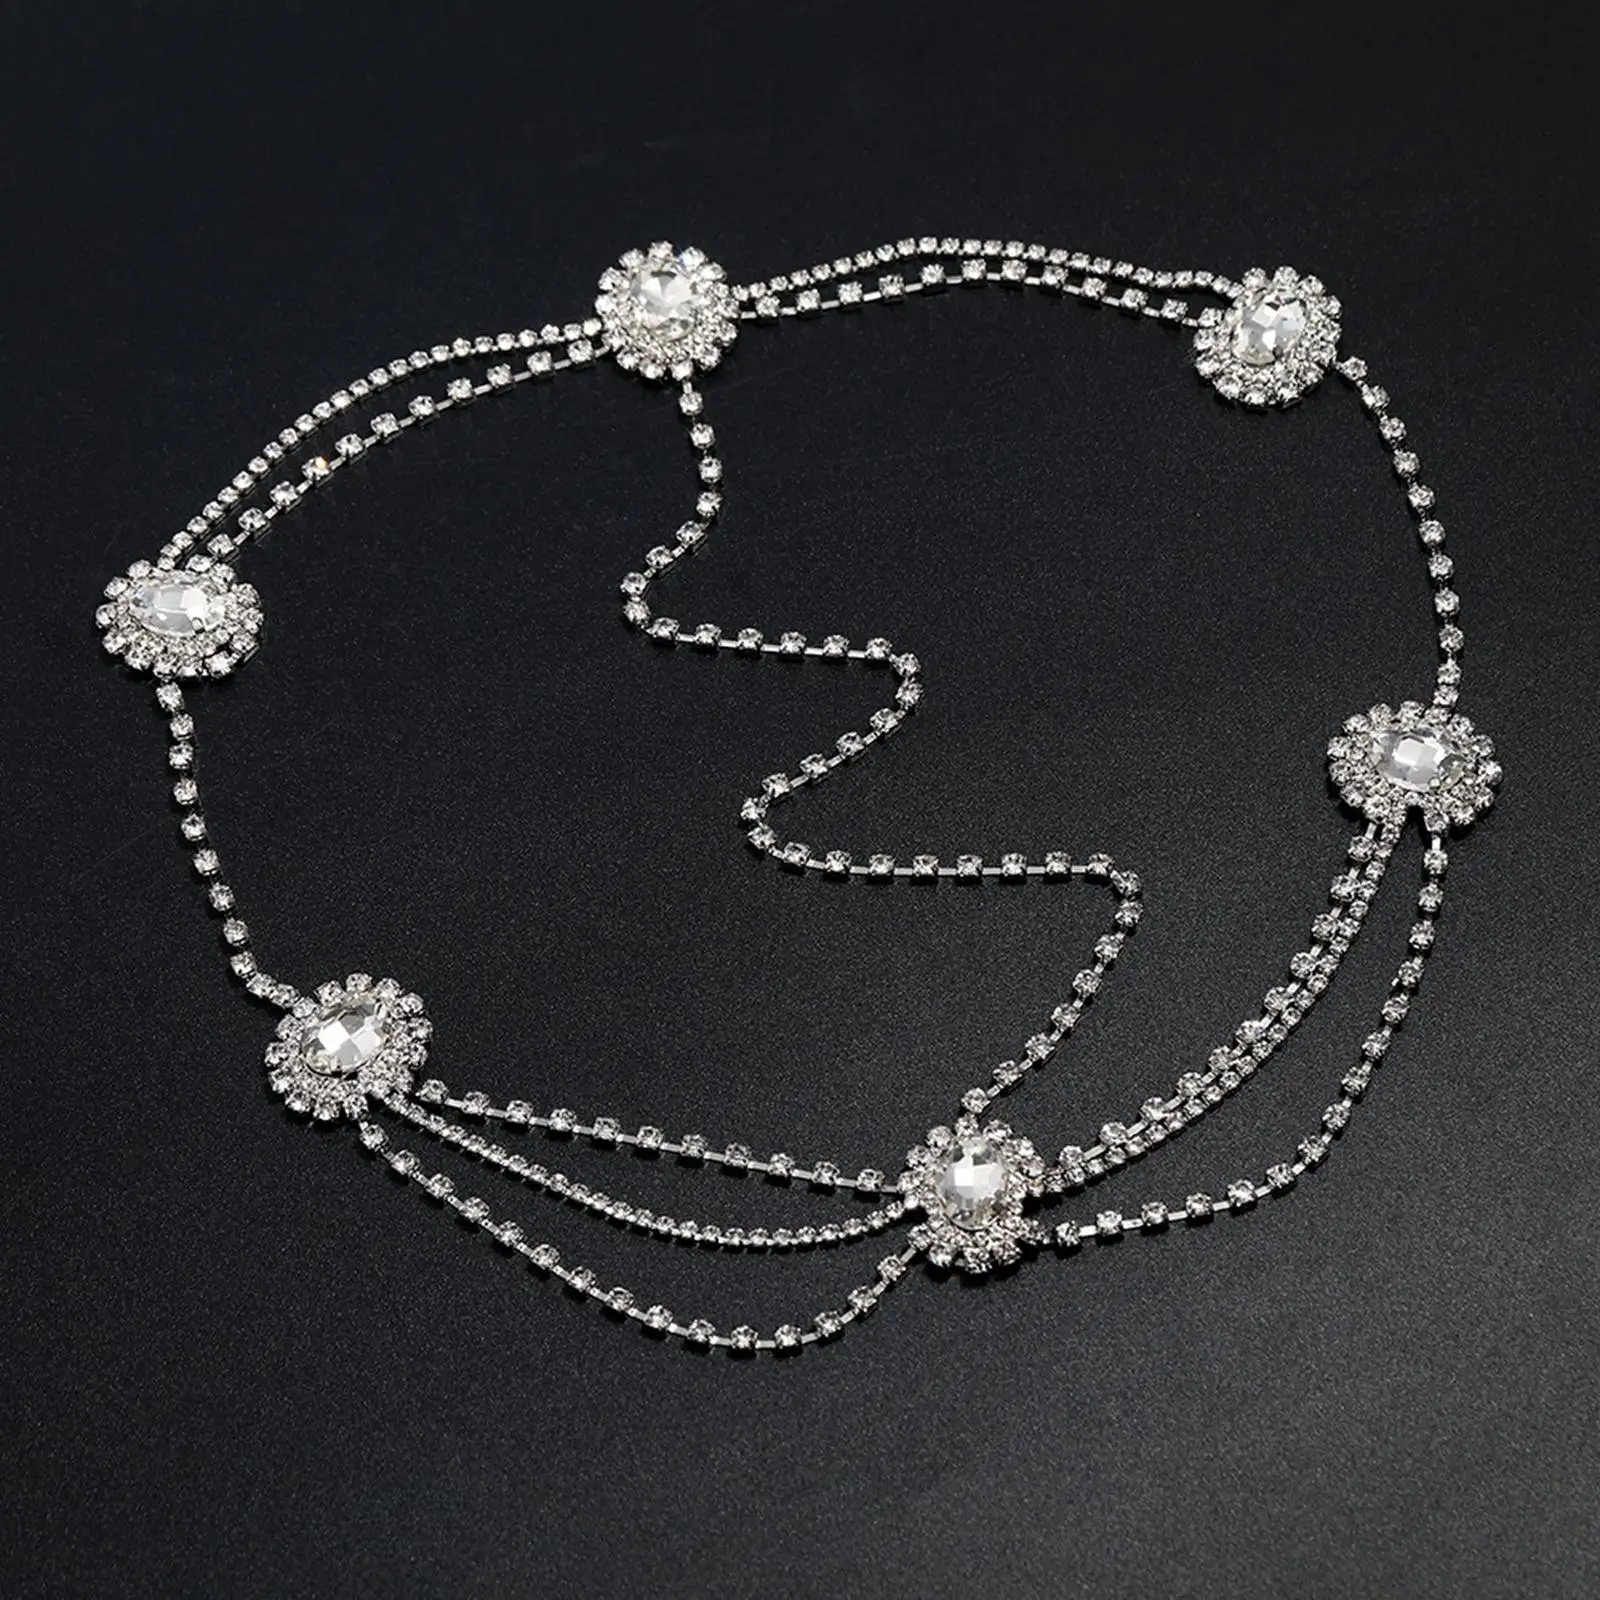 Head Chain Rhinestones Layered Jewelry Boho Glamorous Fashion for Party Prom